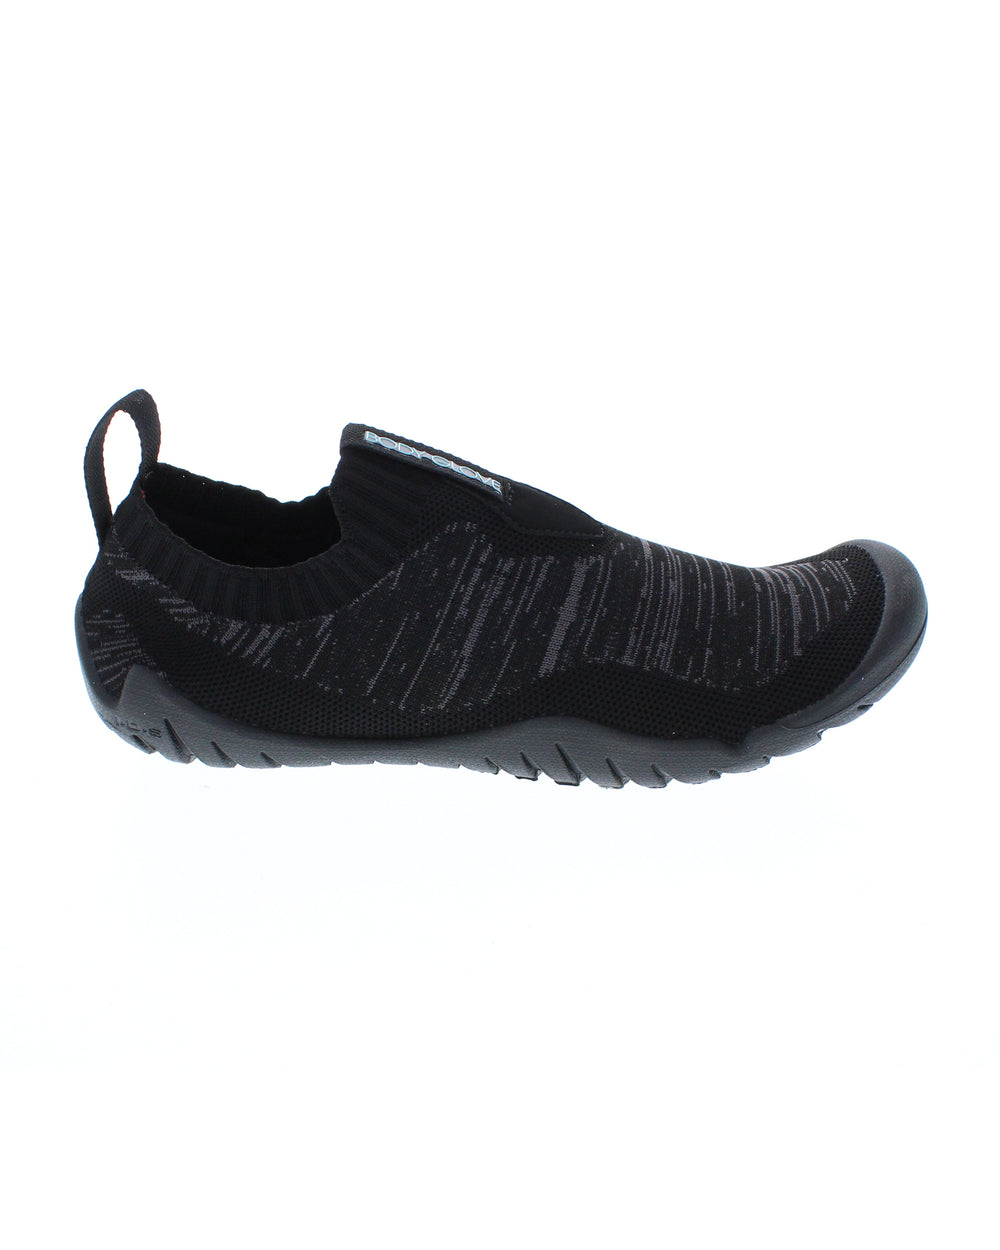 Women's Hydro Knit Siphon Water Shoes - Black/Aqua - Body Glove